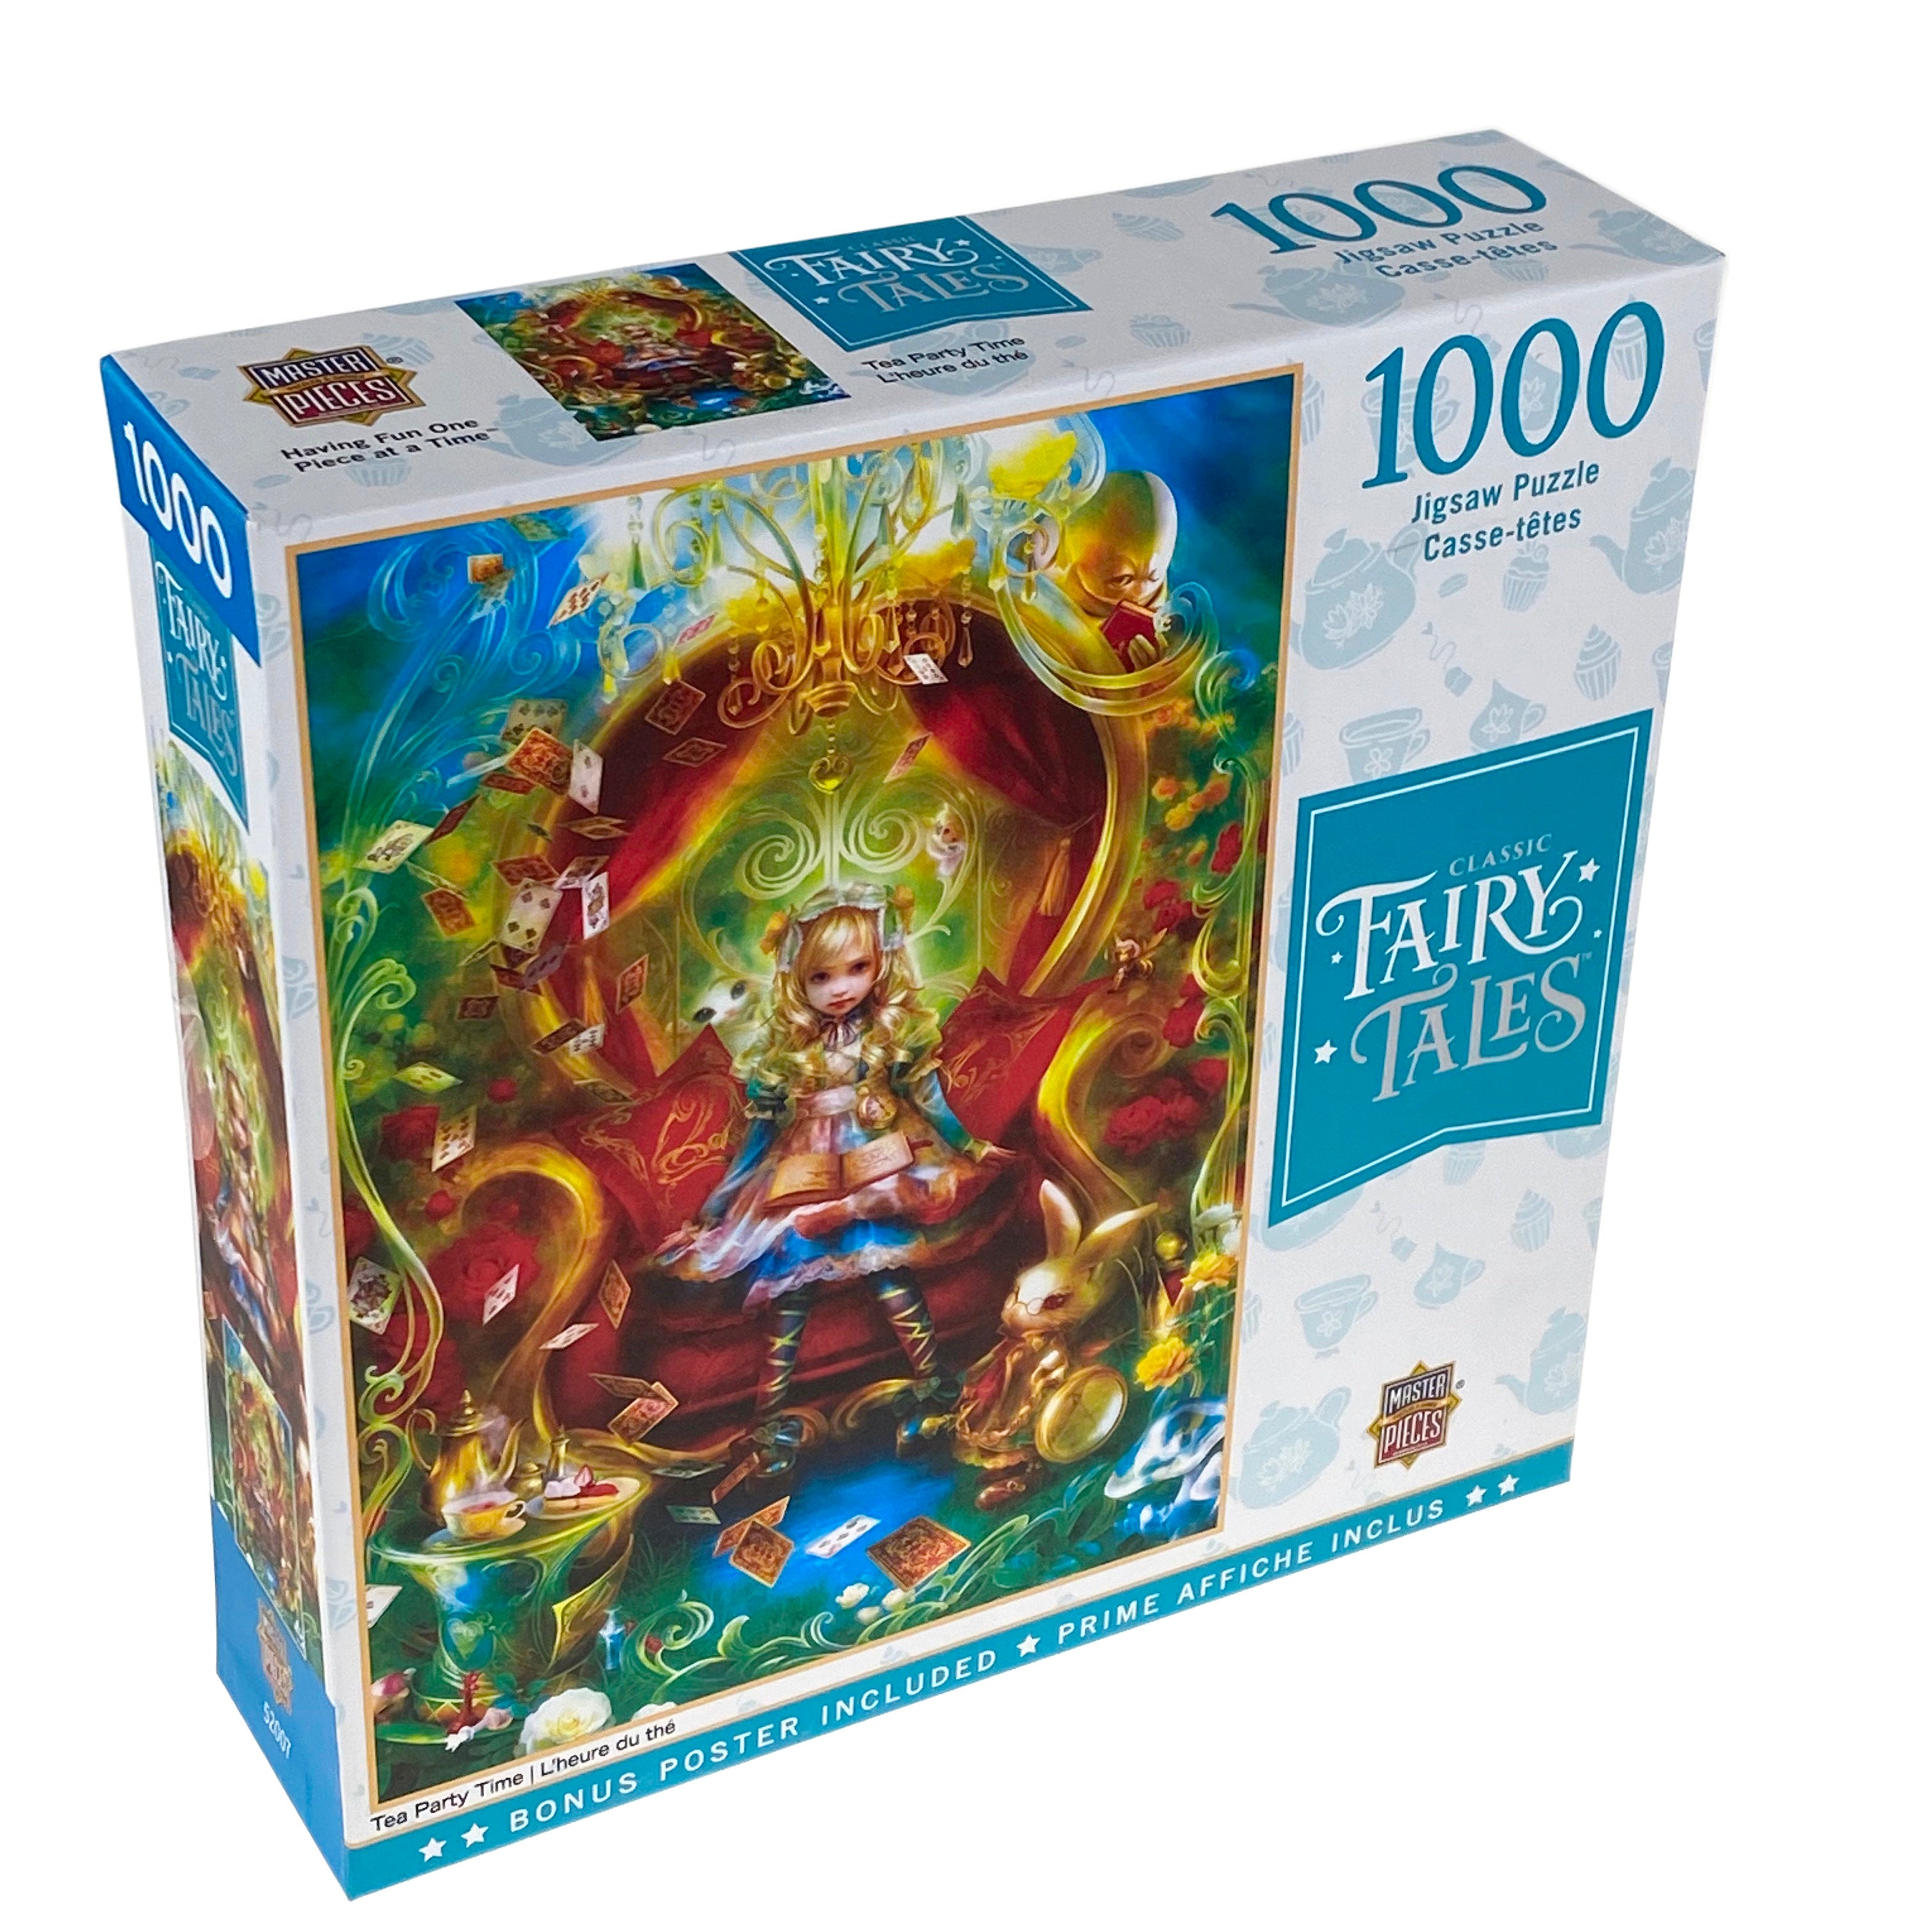 Fairy Tales Tea Party Time 1000 Piece Puzzle    